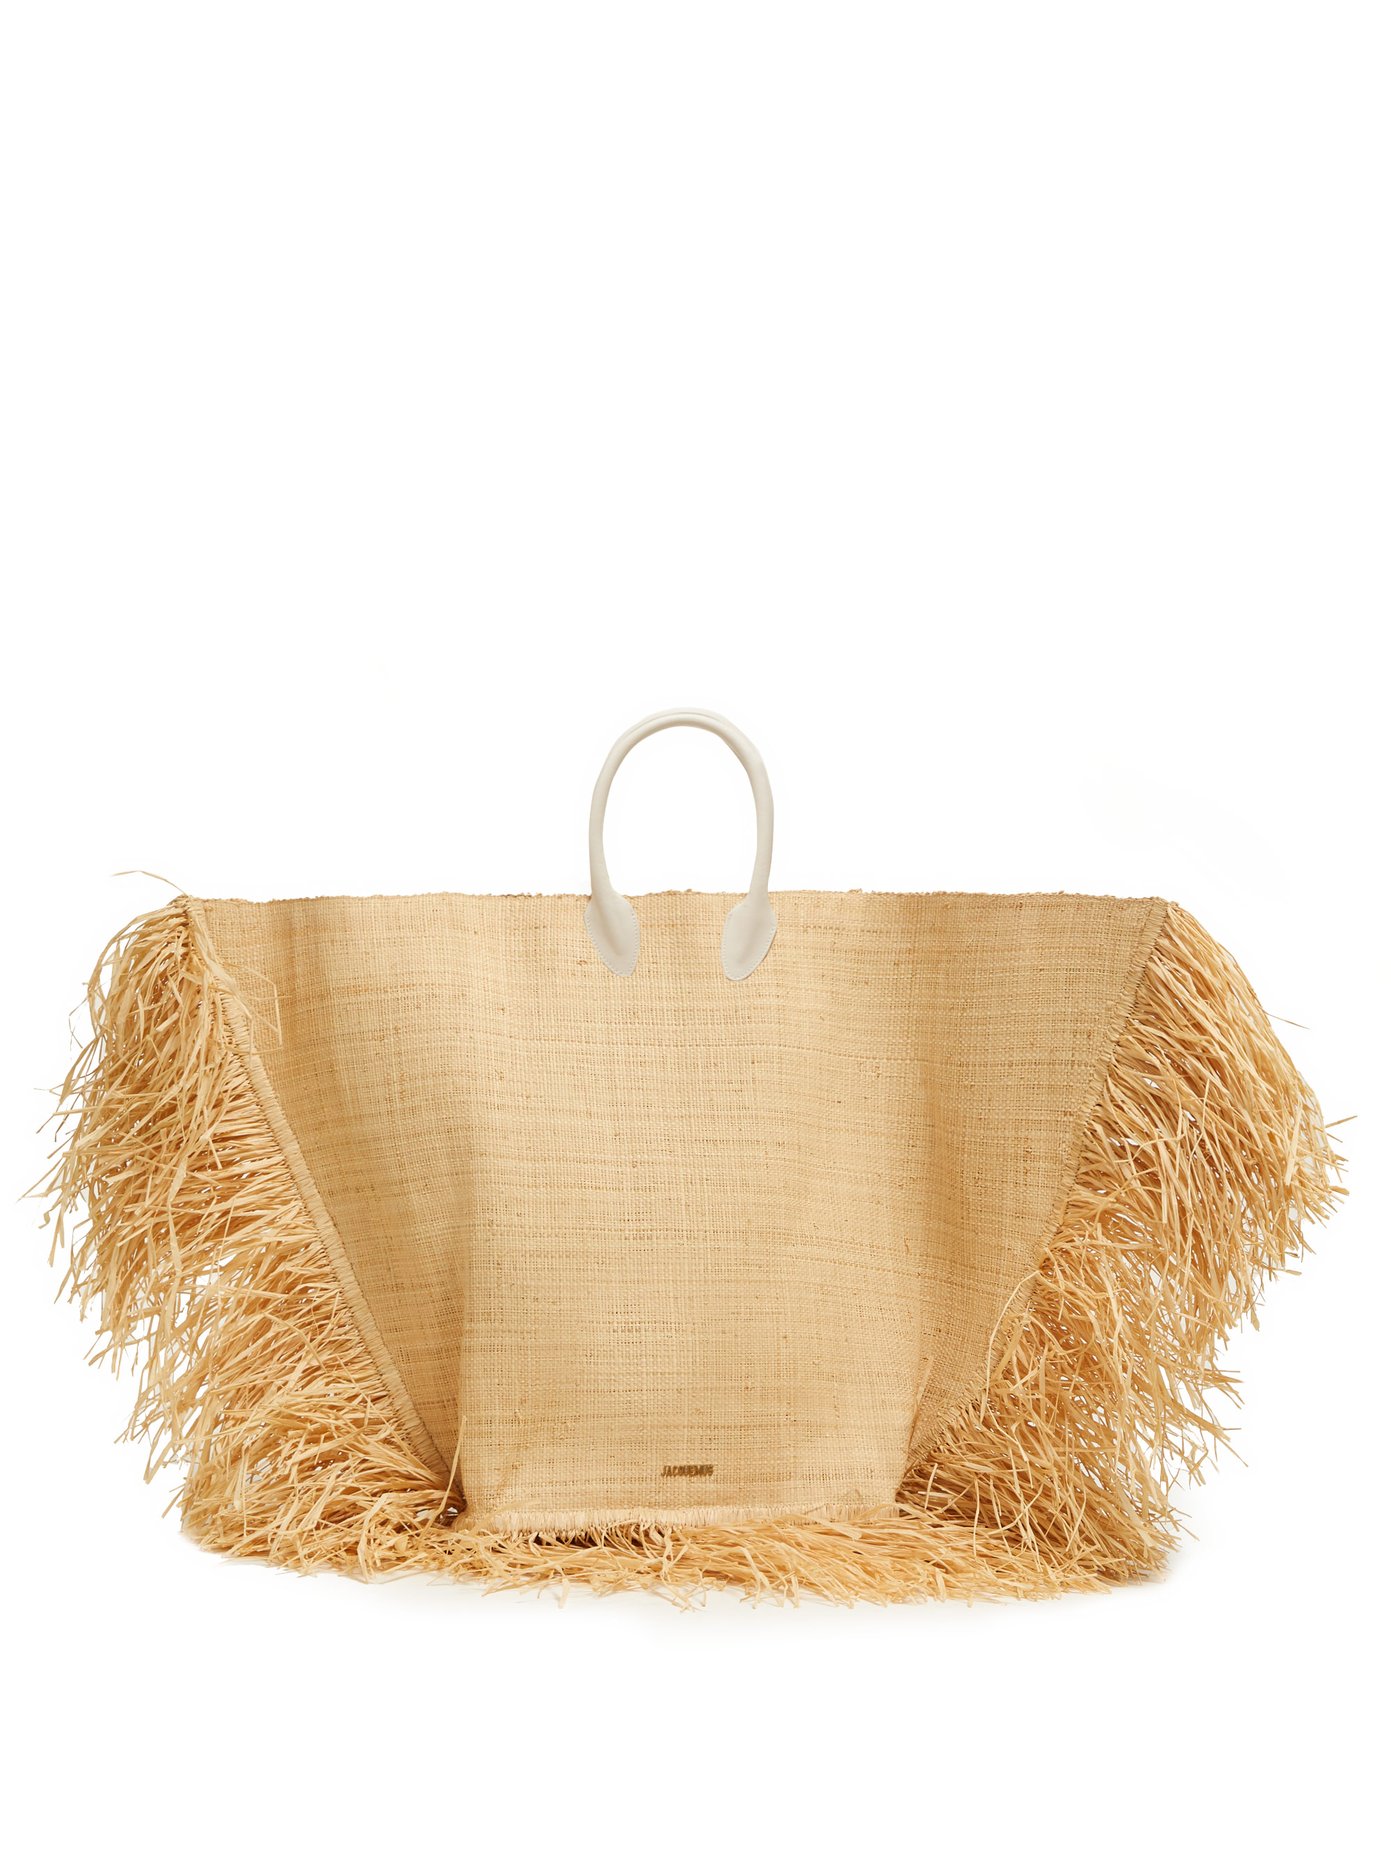 Le Grand Baci woven straw bag | Jacquemus | MATCHESFASHION ...